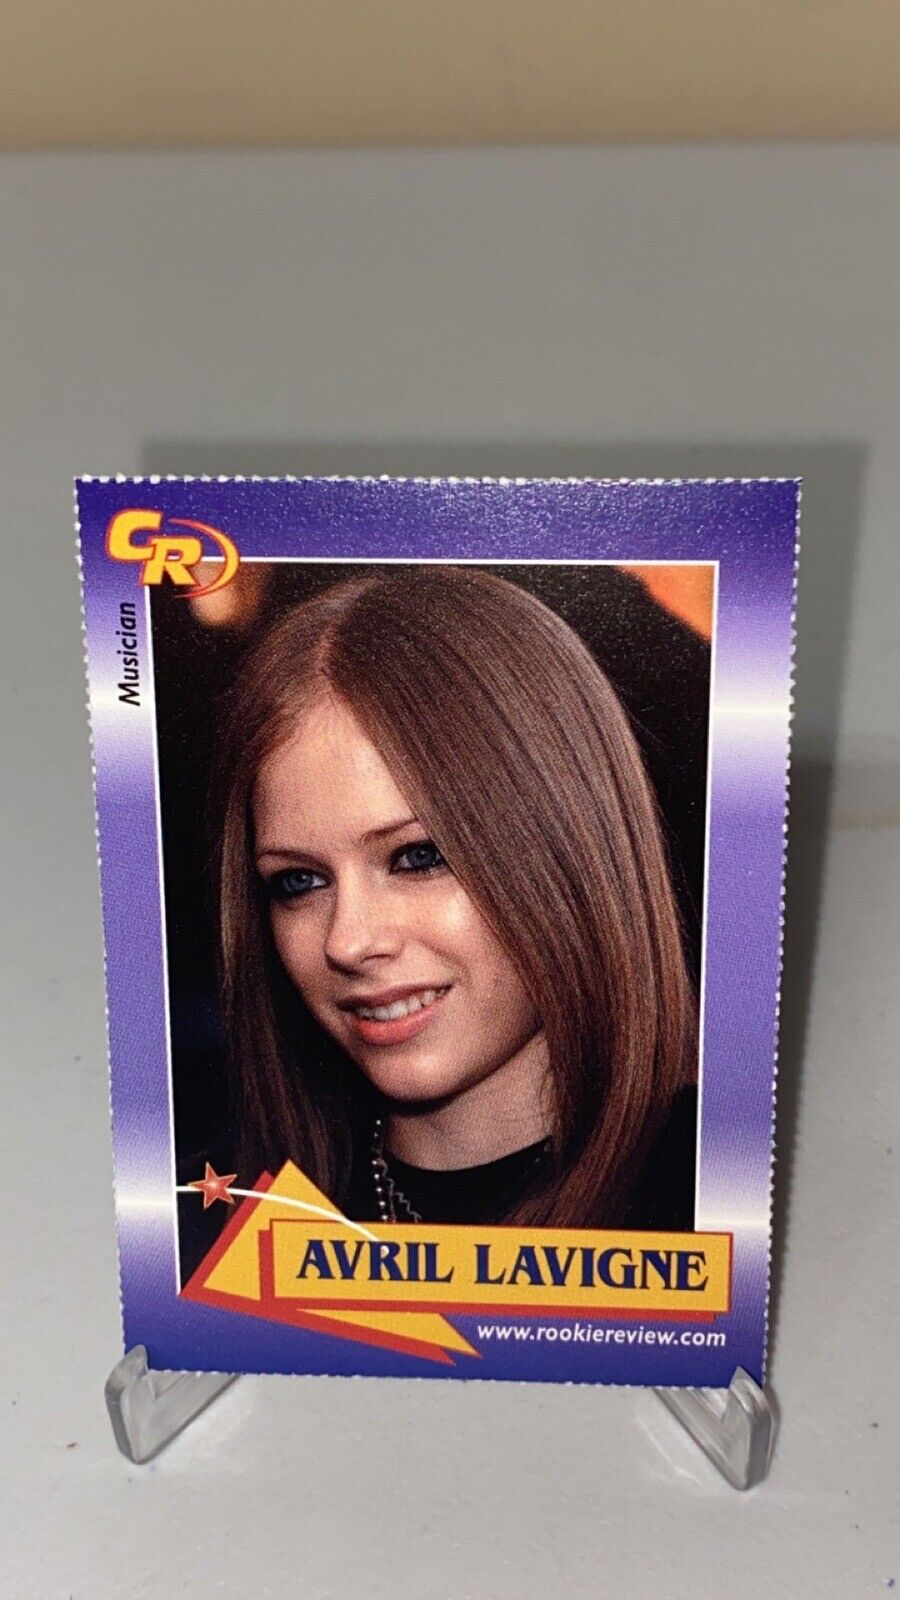 2003 Celebrity Review Avril Lavigne Rookie Review Musician Card #8 Sk8er Boi